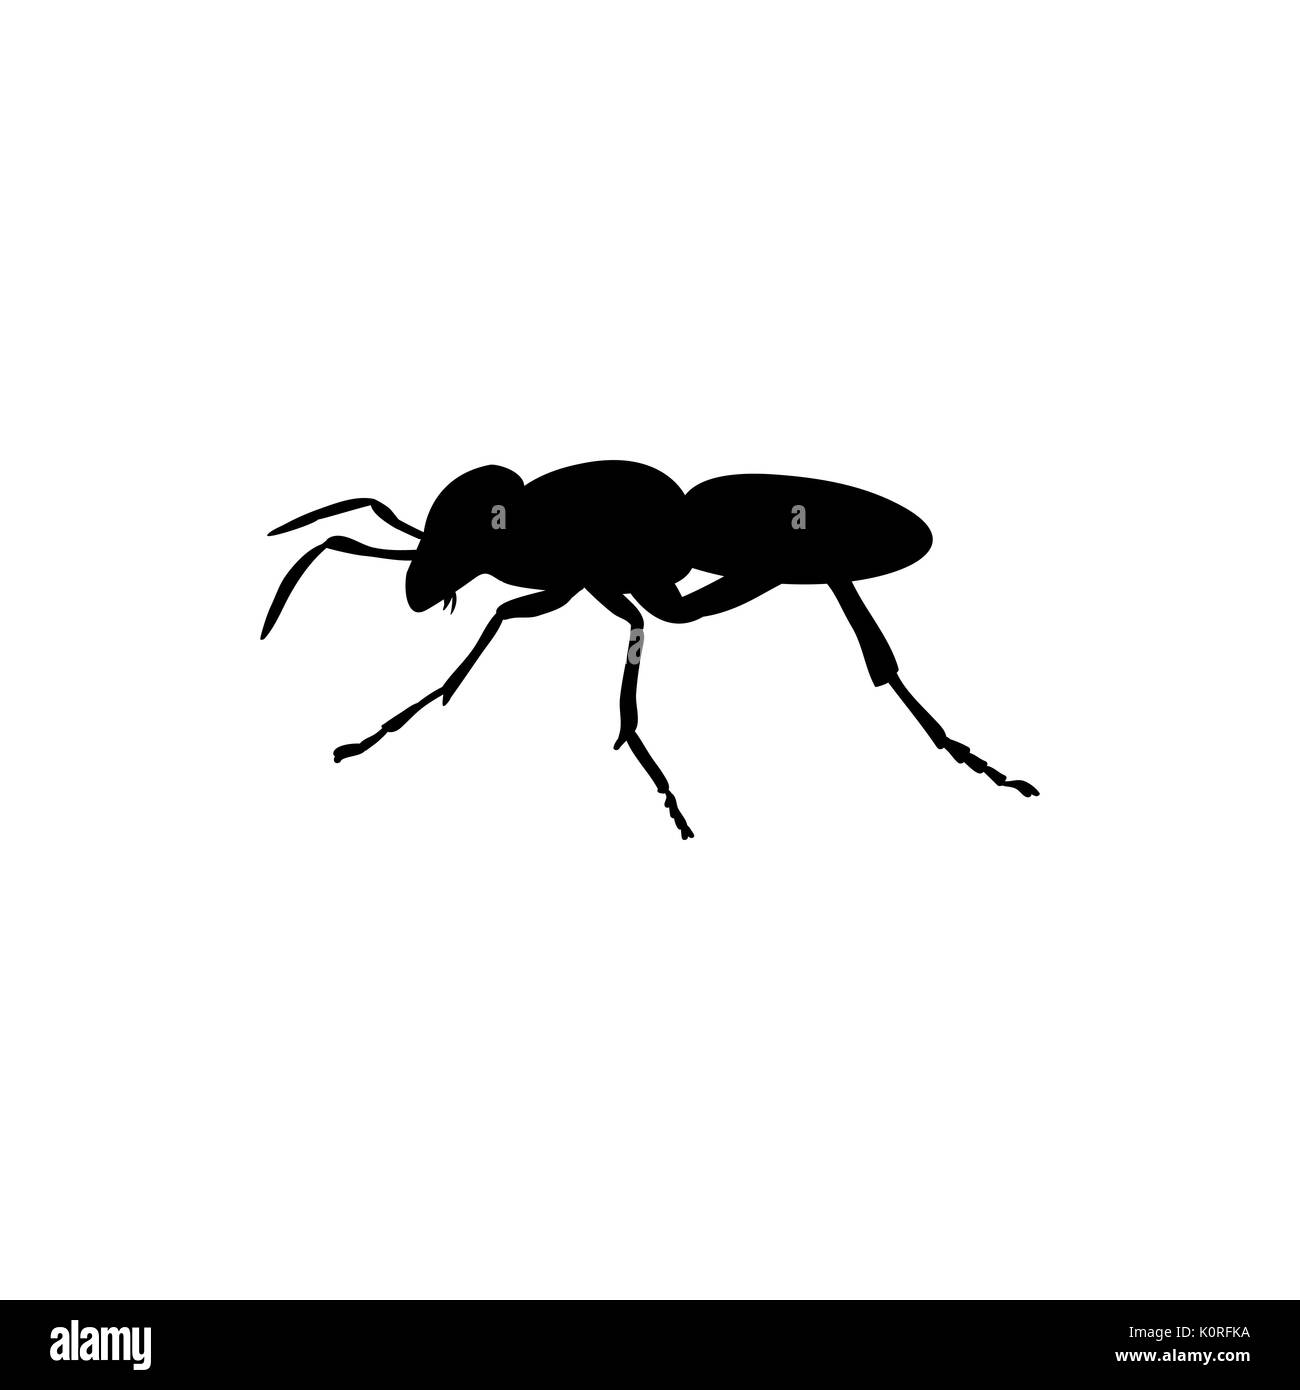 Ameise Insekt schwarze Silhouette Tier. Vektor Illustrator. Stock Vektor